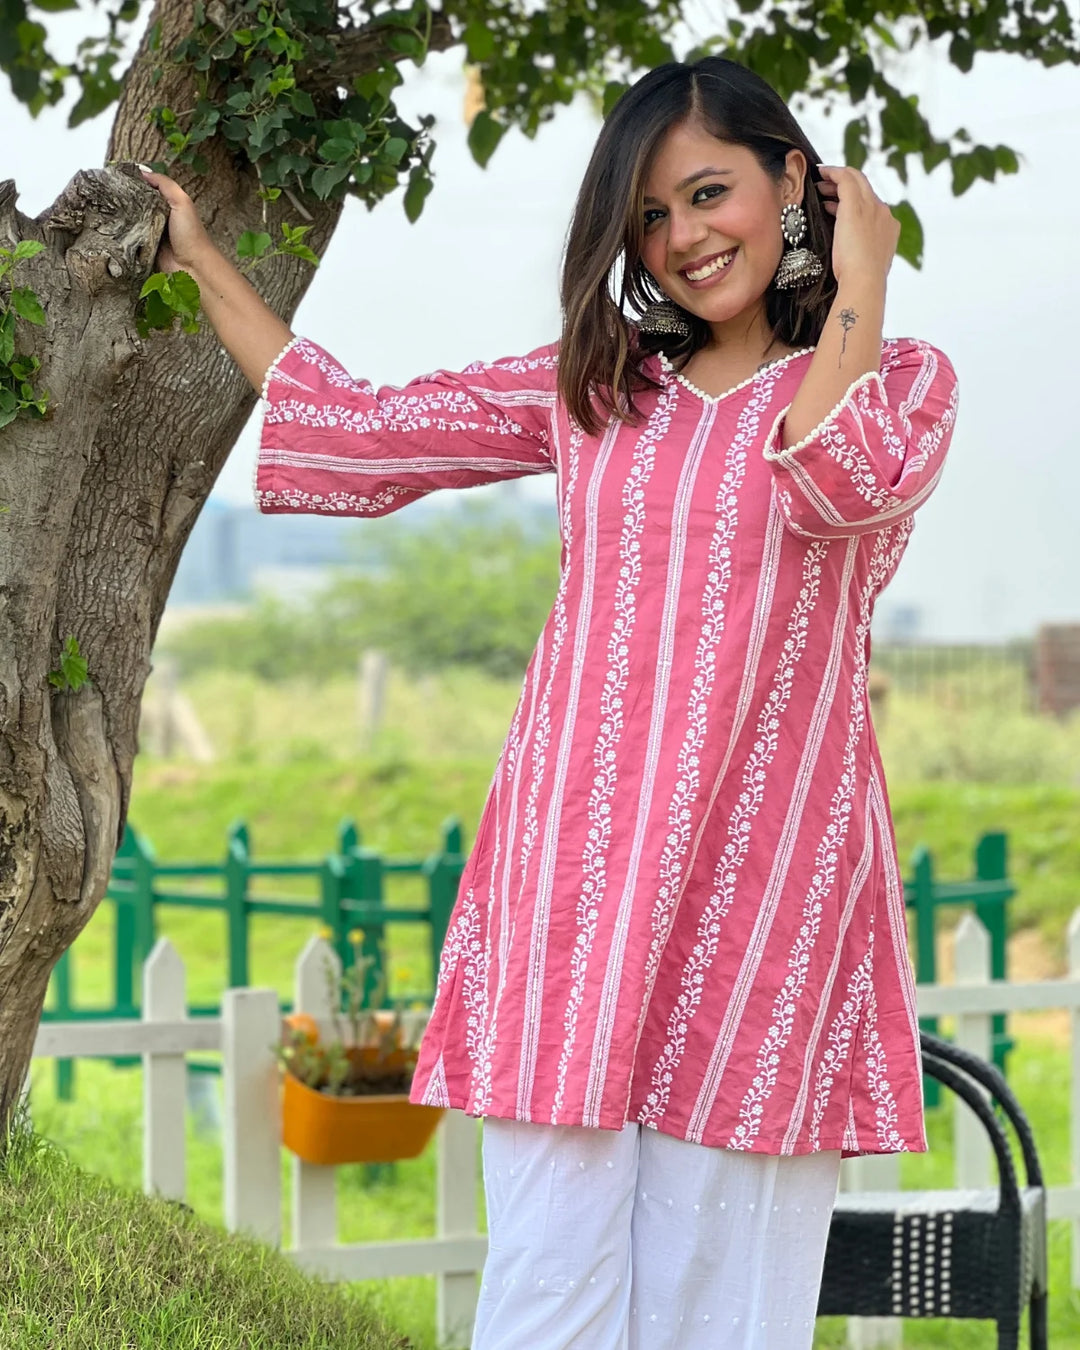 The Svaya - India's Best Women's Online Clothing Store